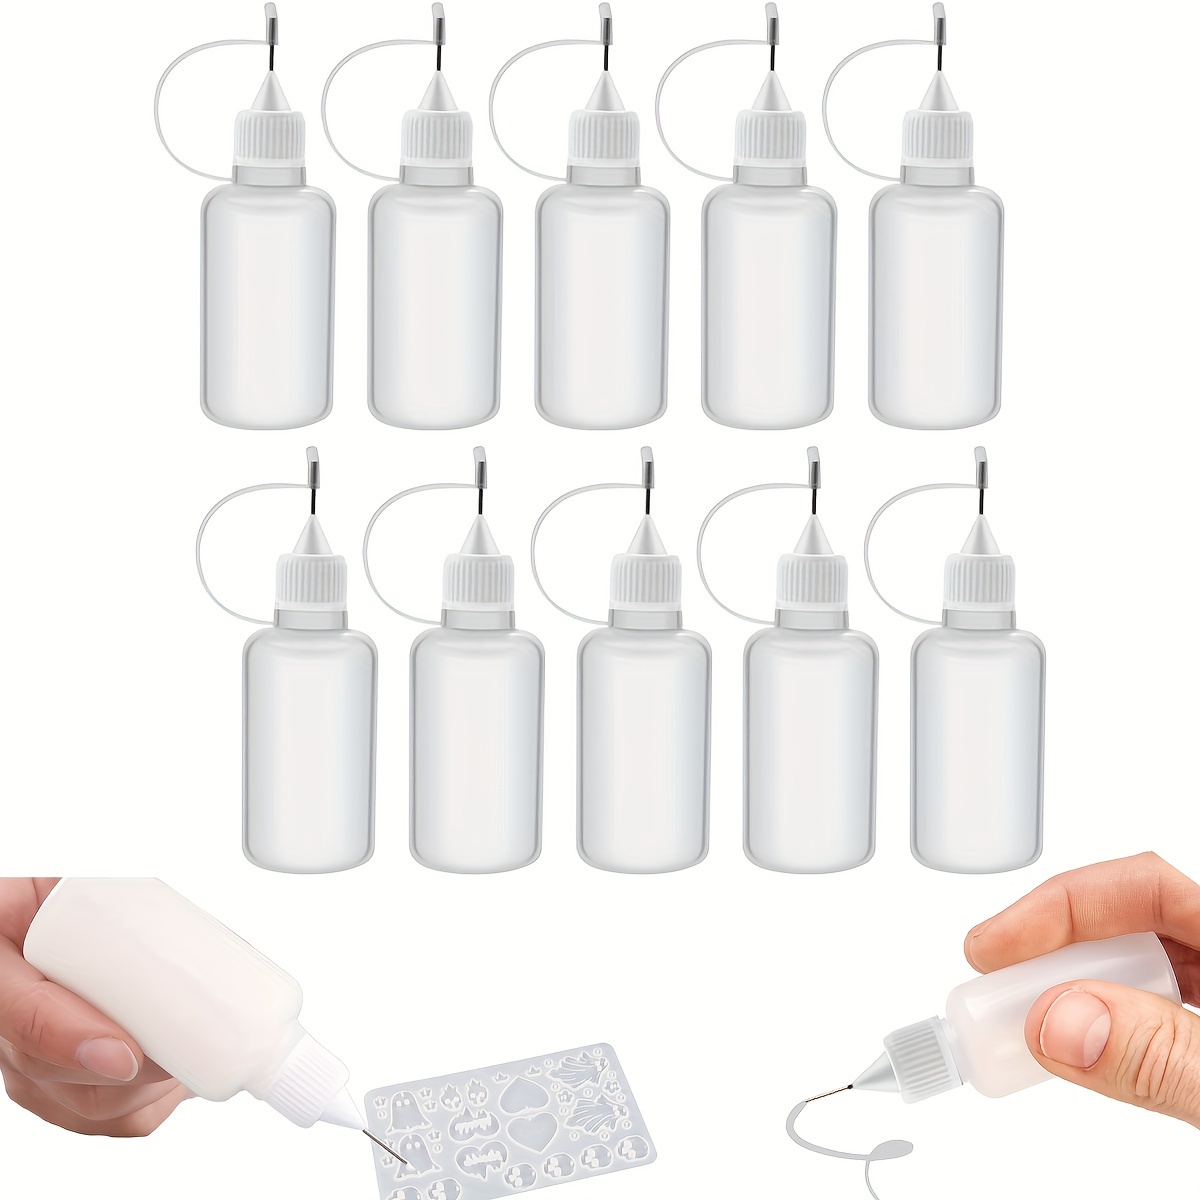 1pc Reuse White Plastic Bottle Squeeze Glue Applicator Paper Quilling  Needle Tip Cap Silicone Loop Scrapbooking Craft Tools